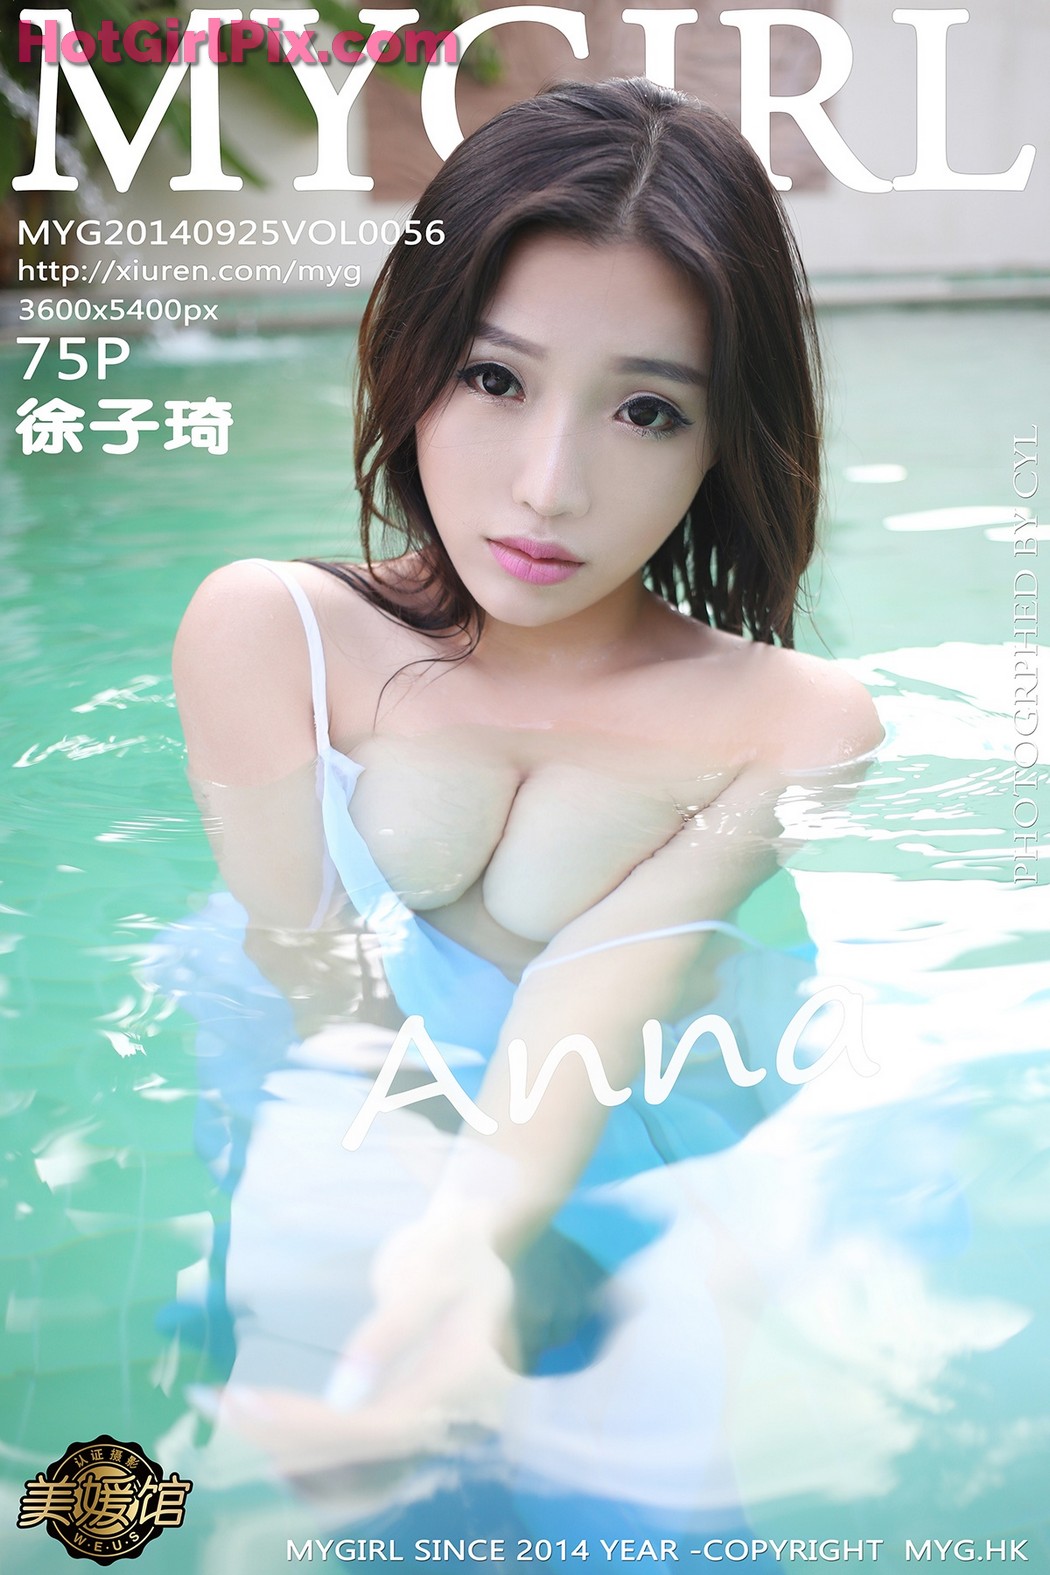 [MyGirl] Vol.056 Anna徐子琦 Xu Zi Qi Cover Photo